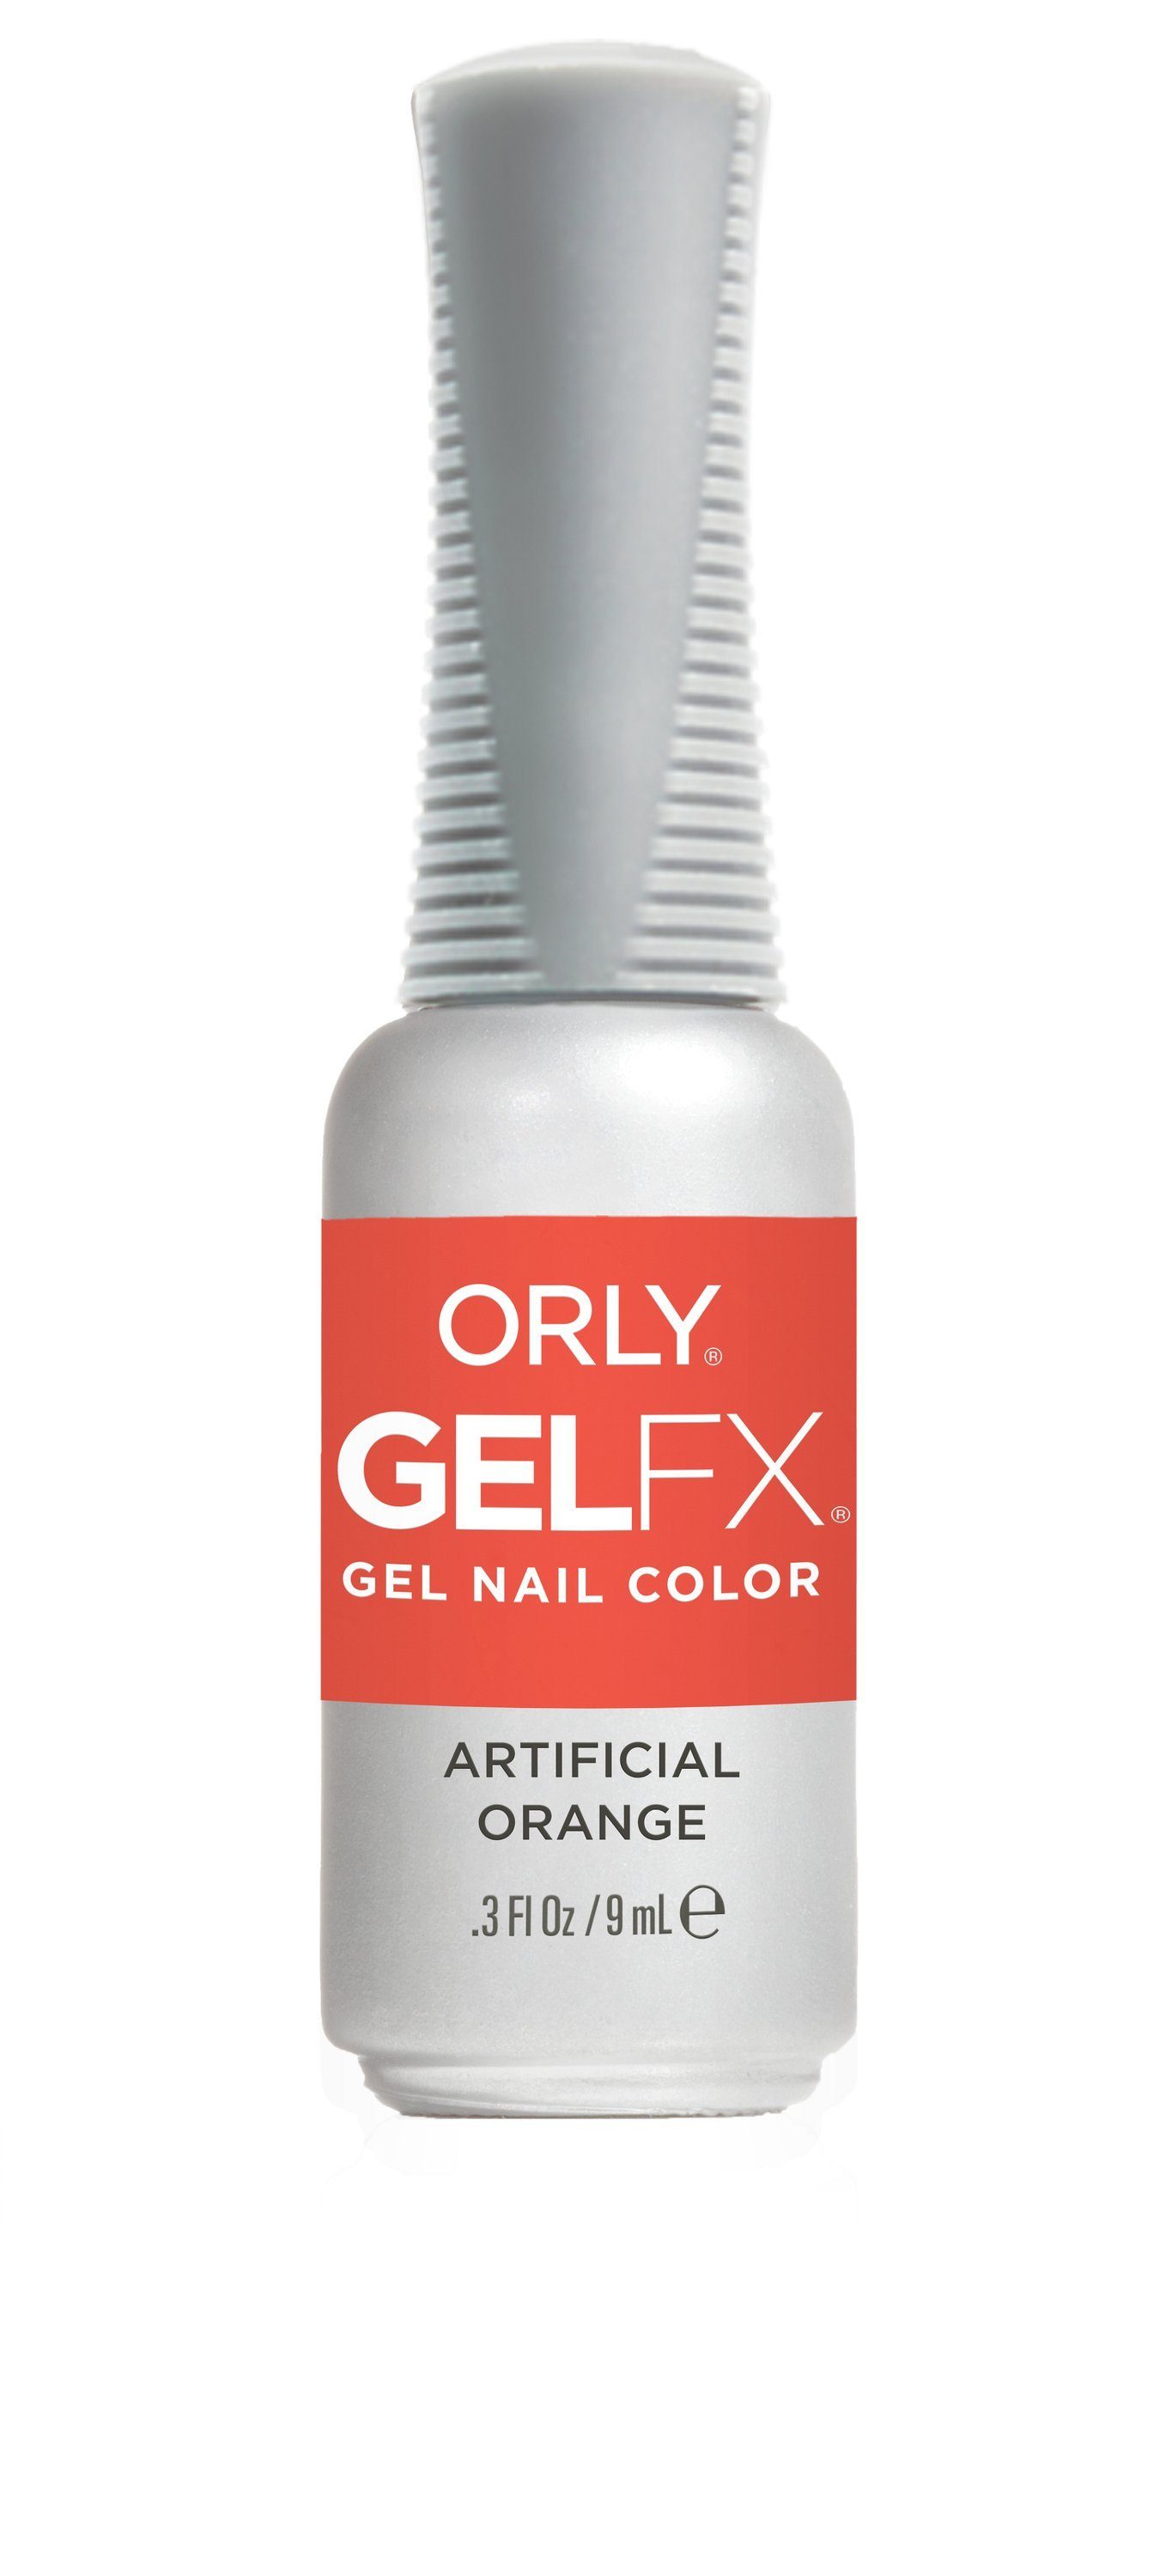 ORLY UV-Nagellack GEL FX Artificial Orange, 9ML | Nagellacke